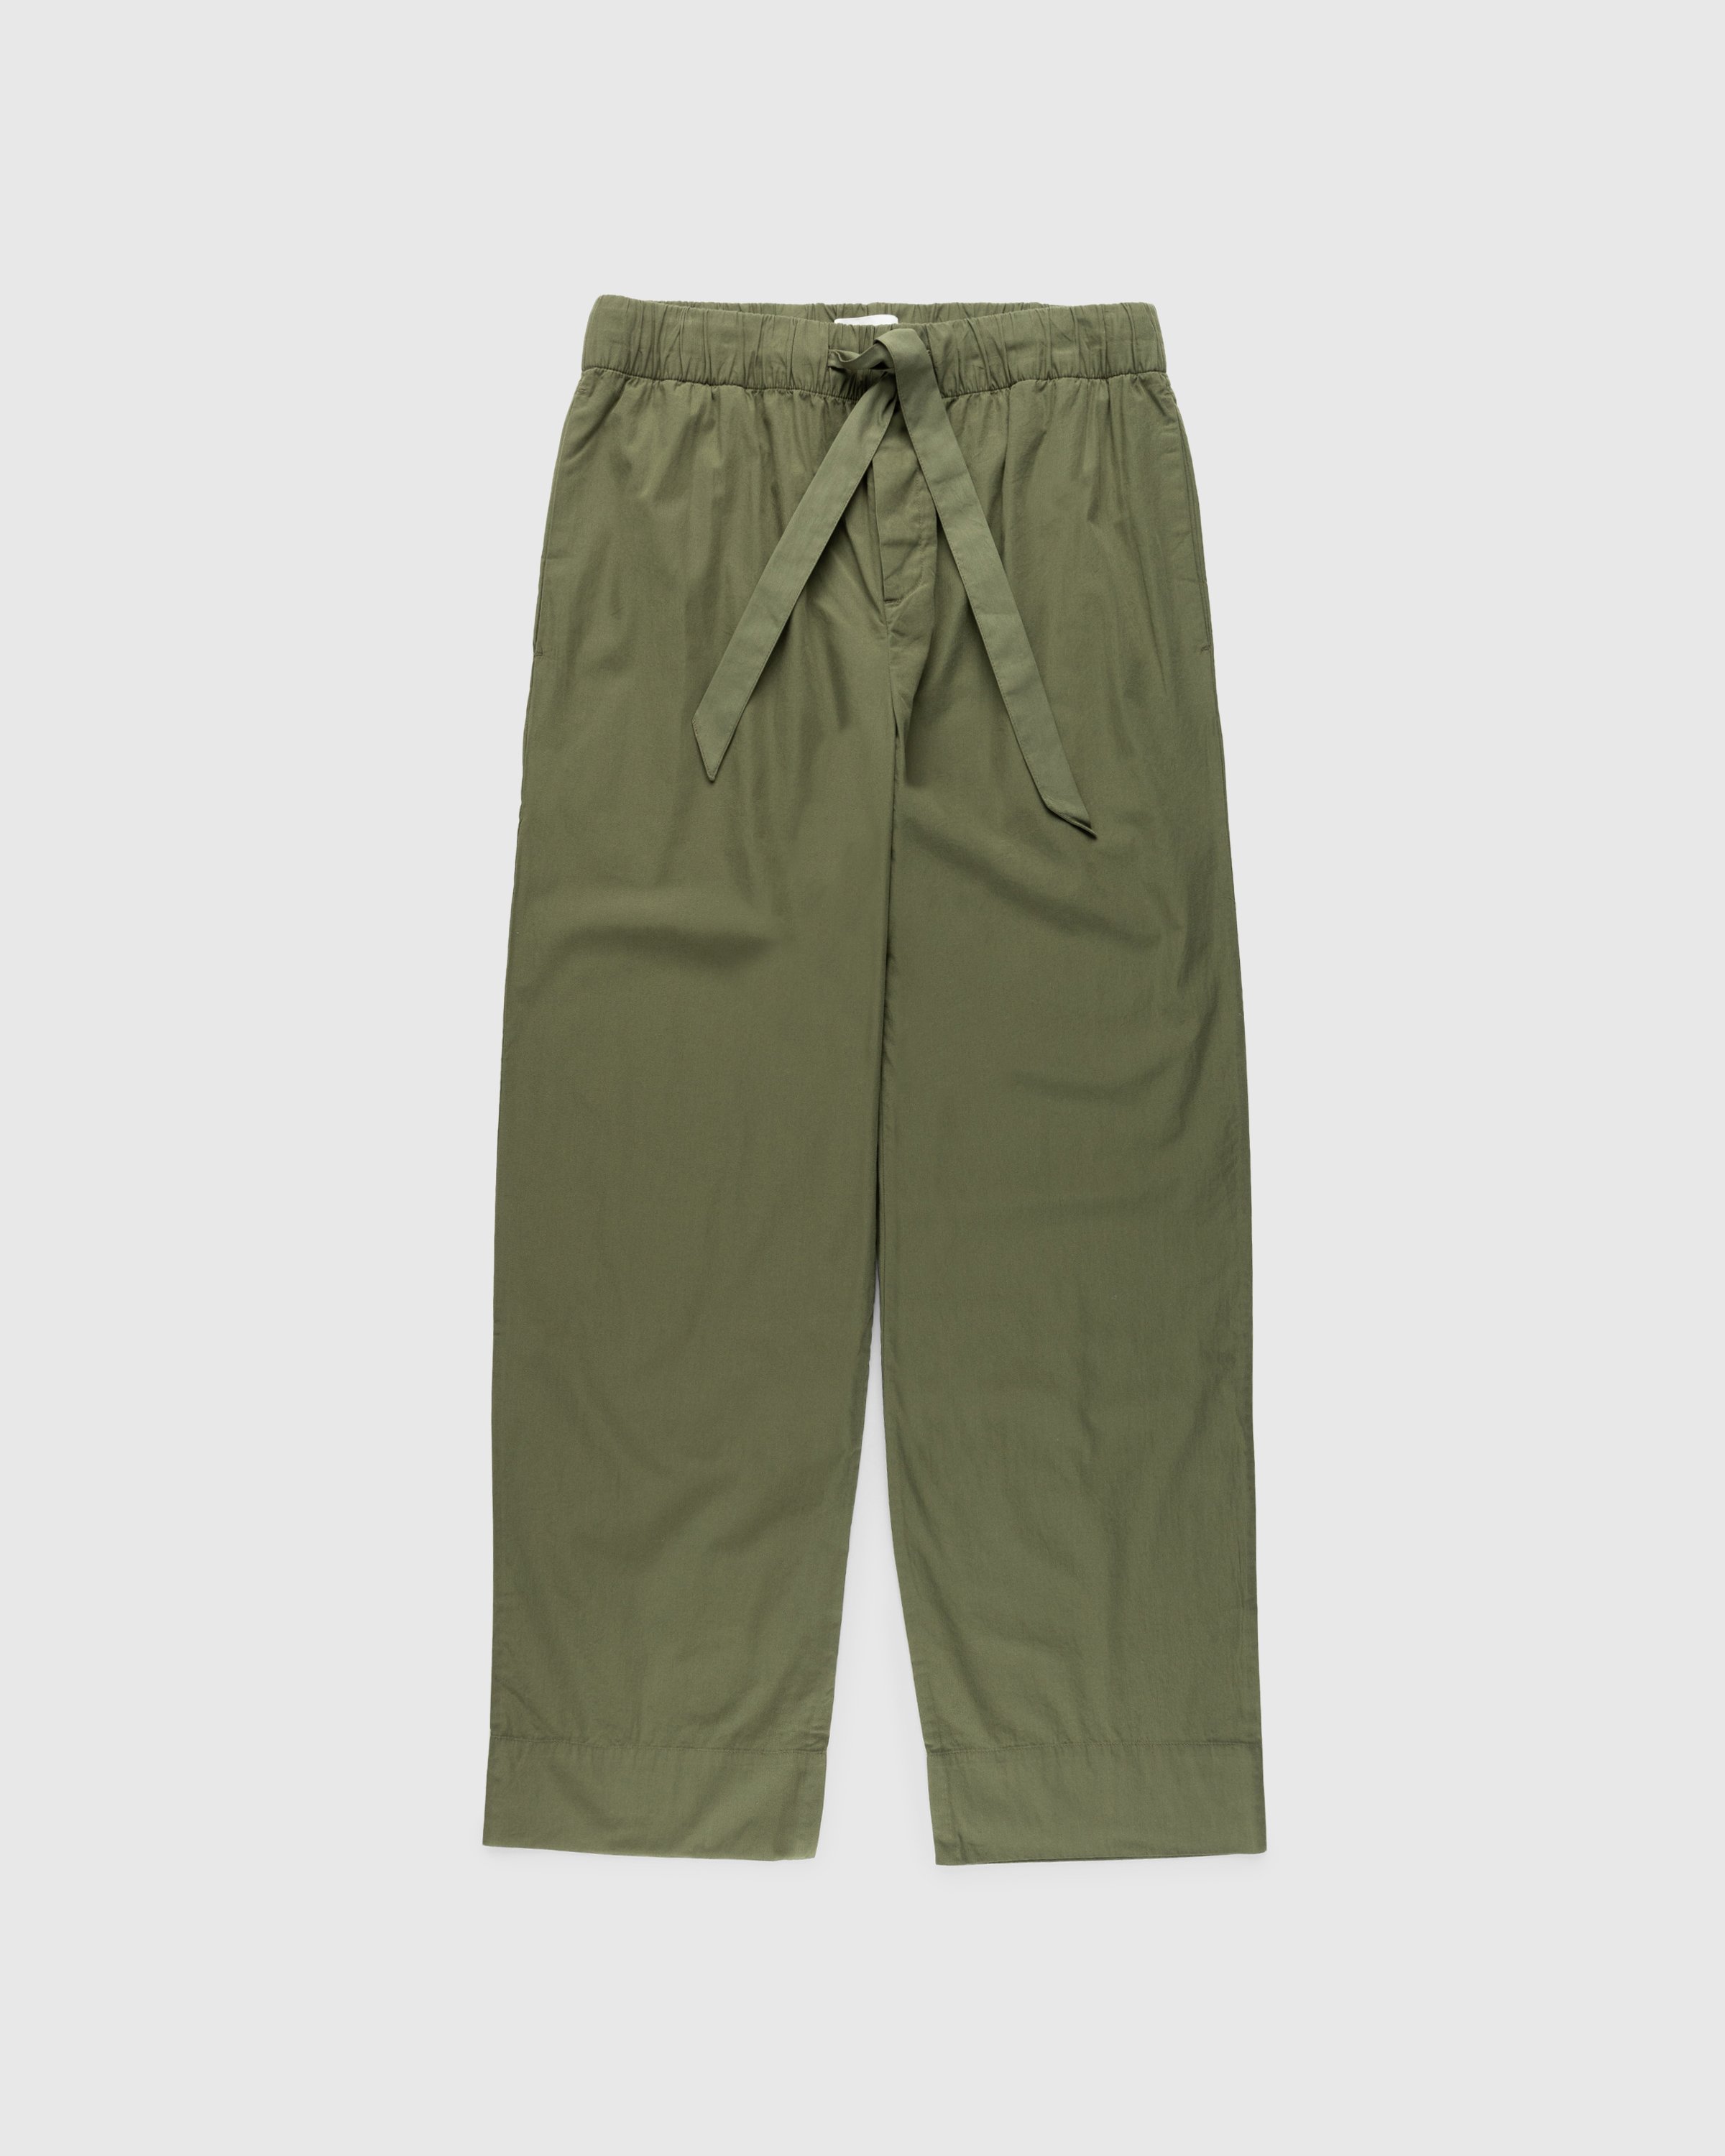 Tekla - Cotton Poplin Pyjamas Pants Willow - Clothing - Green - Image 1